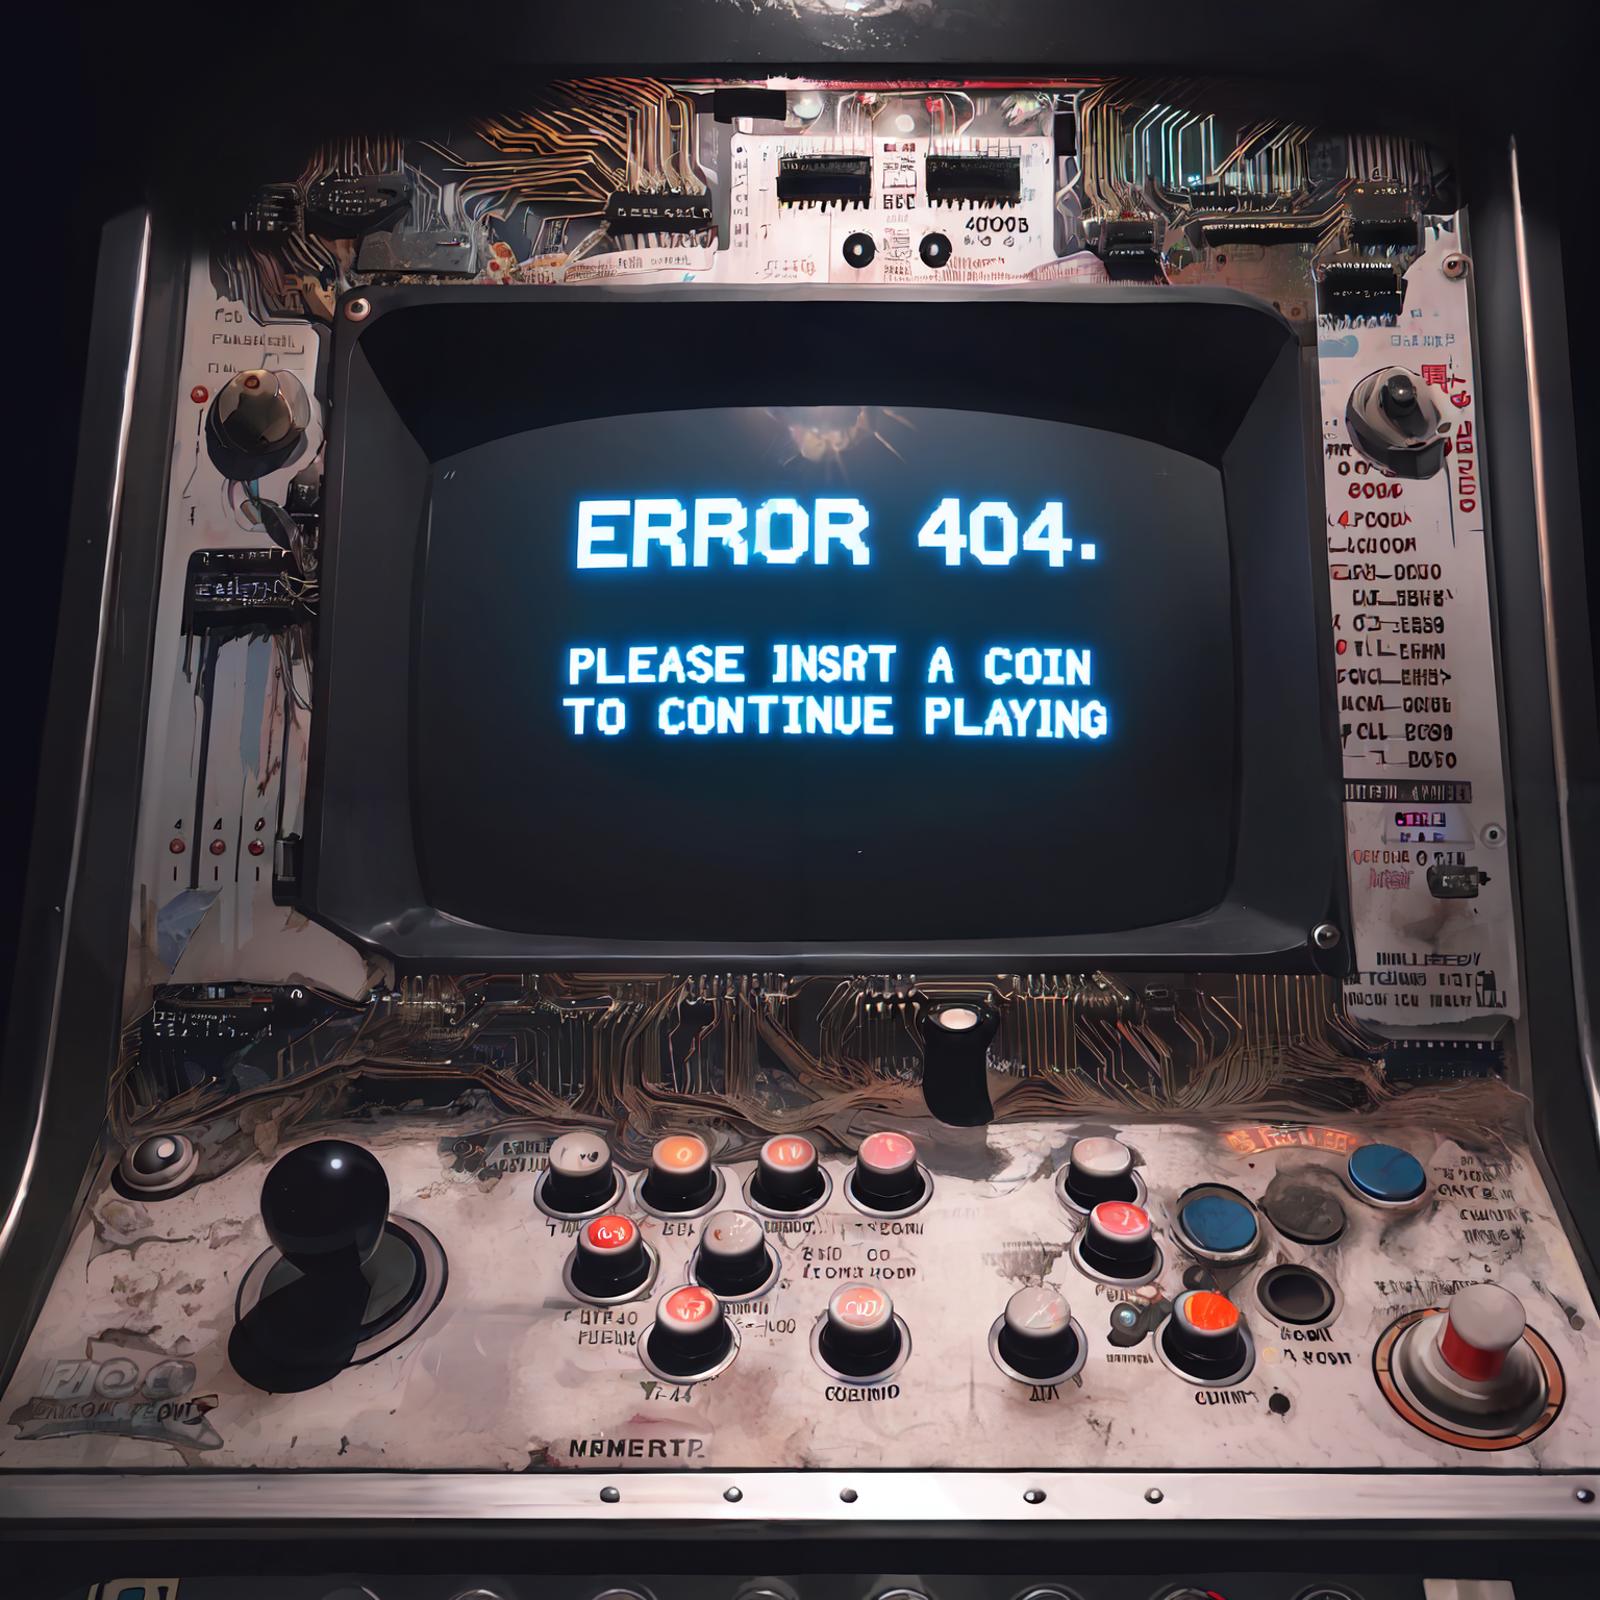 An error message on a video game machine.